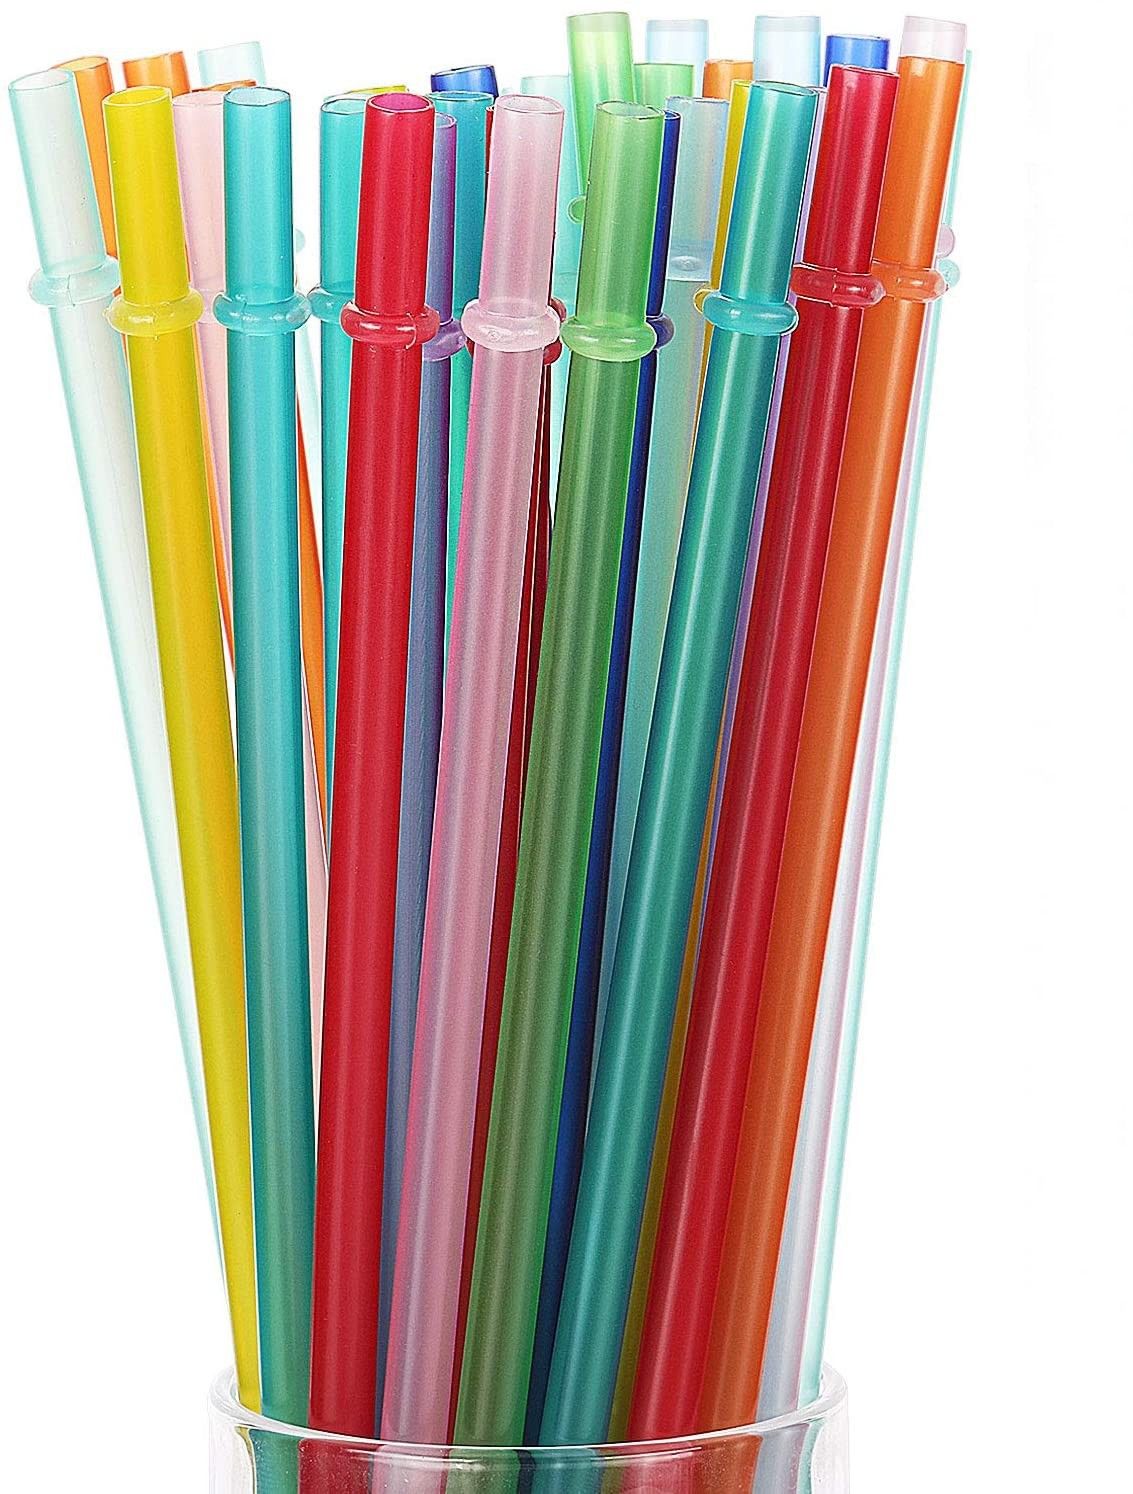 only straw